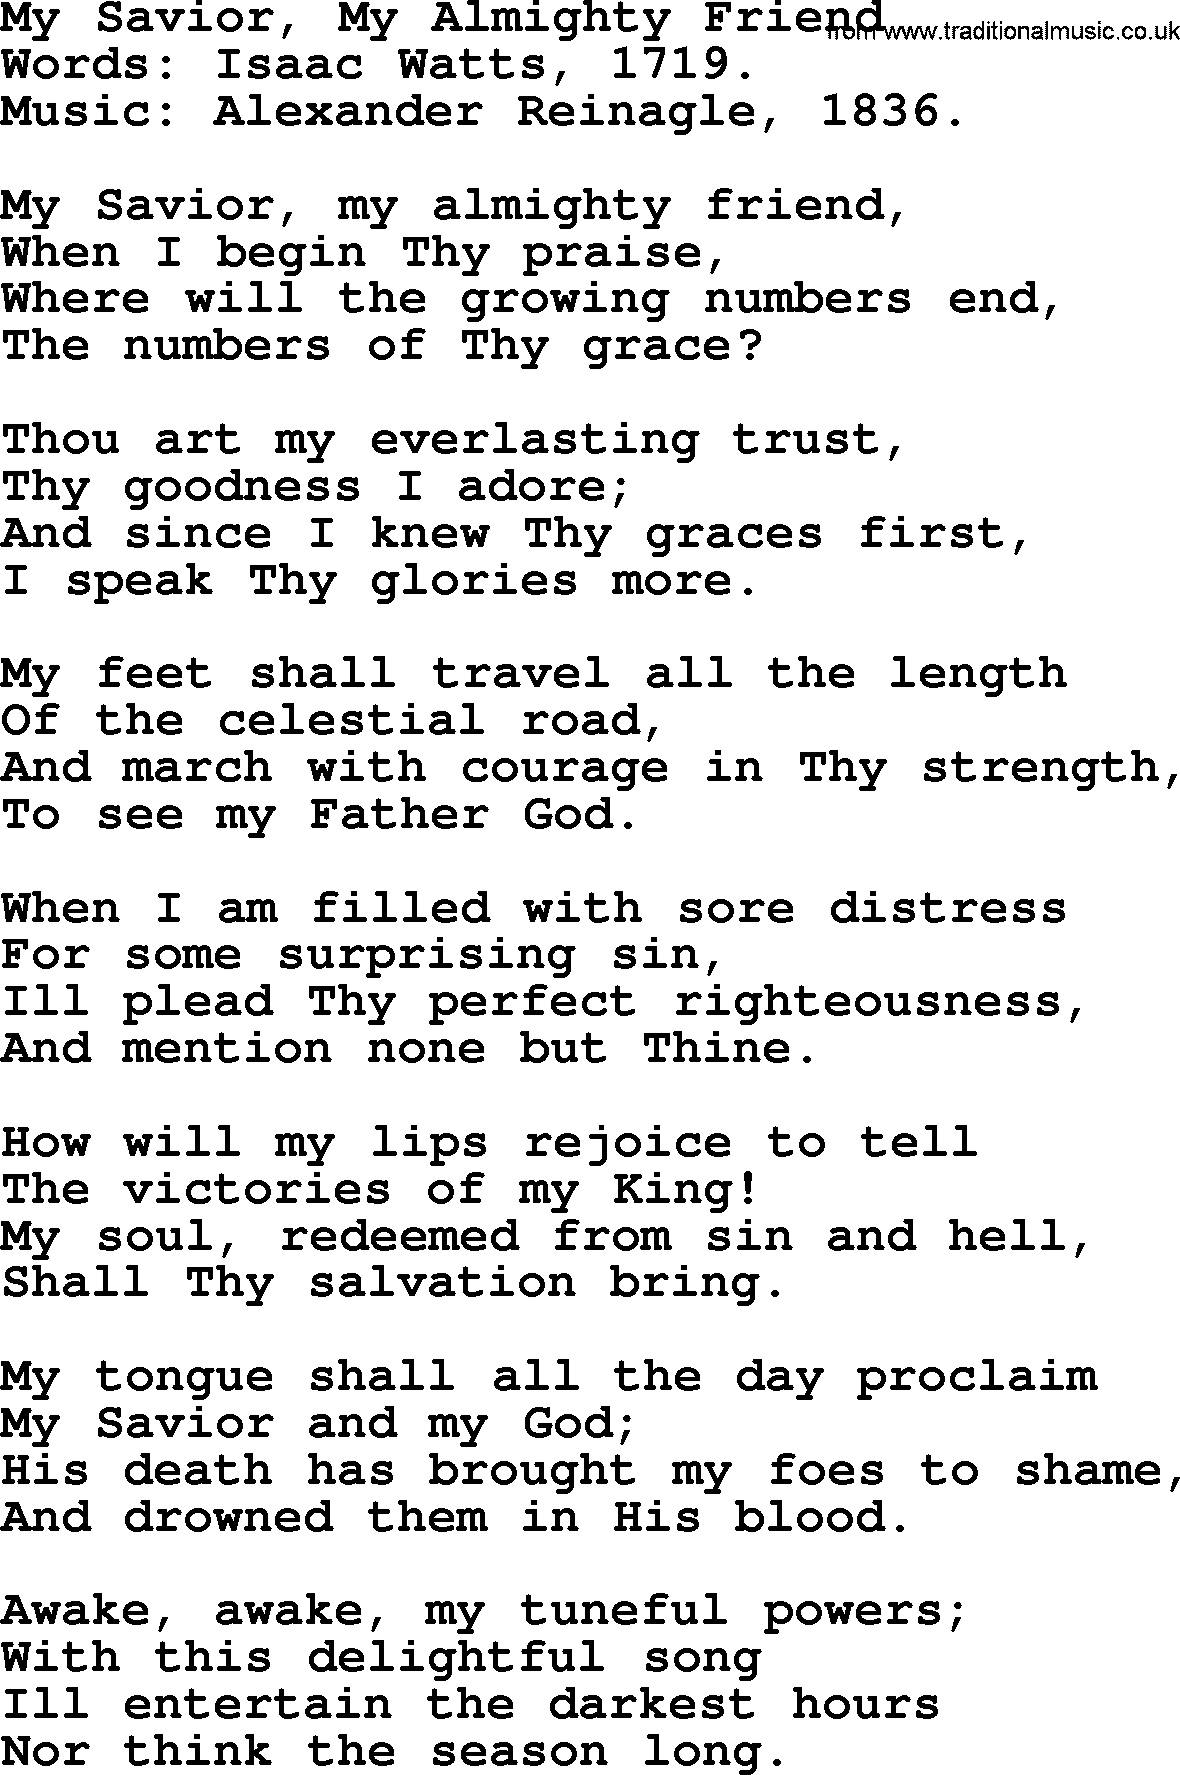 Isaac Watts Christian hymn: My Savior, My Almighty Friend- lyricss